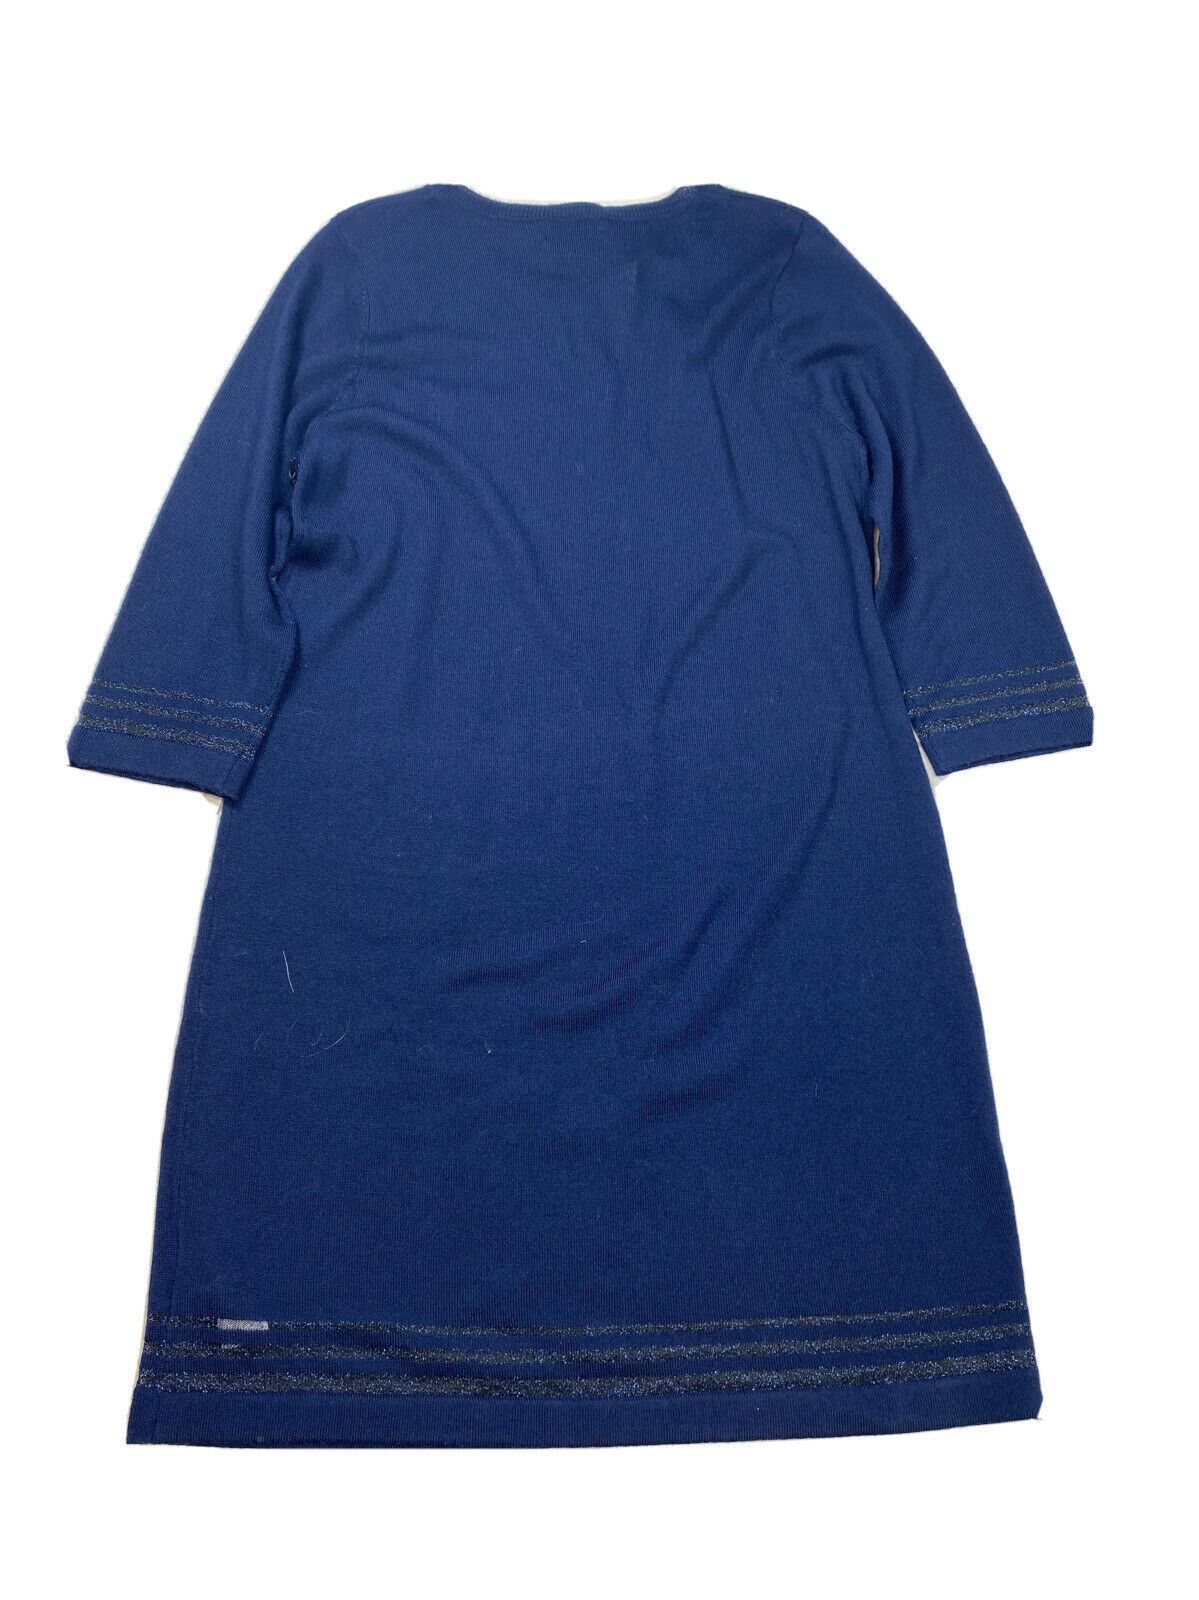 NUEVO Vestido estilo suéter de manga 3/4 de punto transparente azul de Nicole Miller para mujer - L